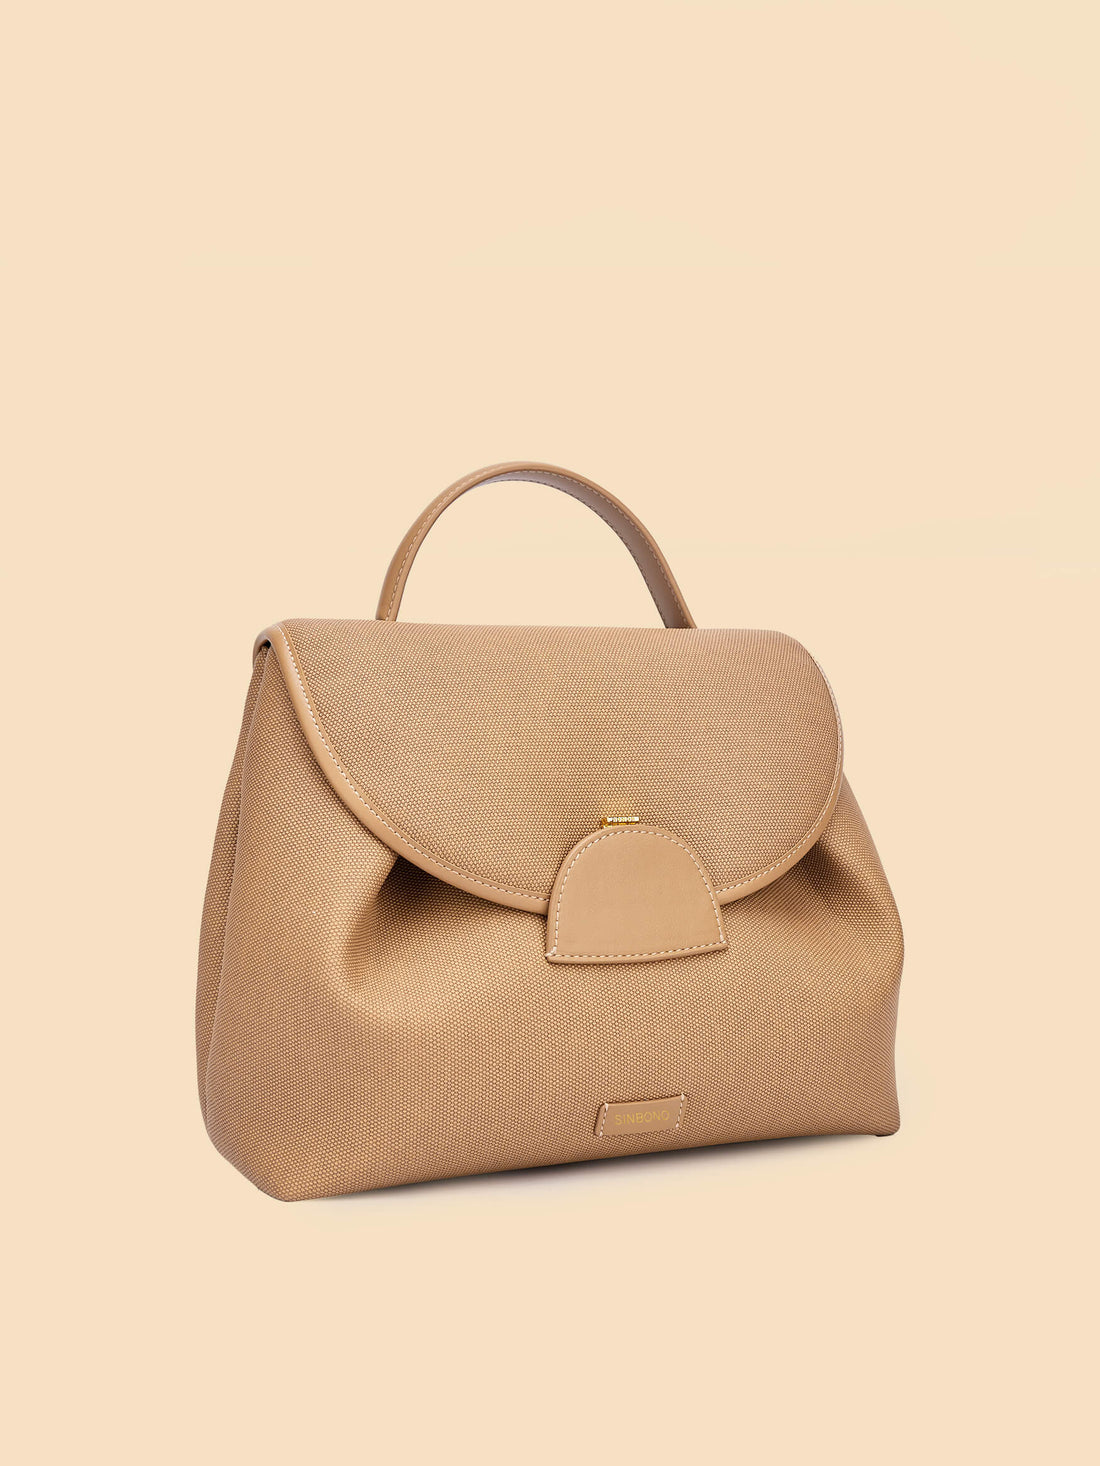 SINBONO Brown Crossbody Bag- High-quality Soft Vegan Leather Bag